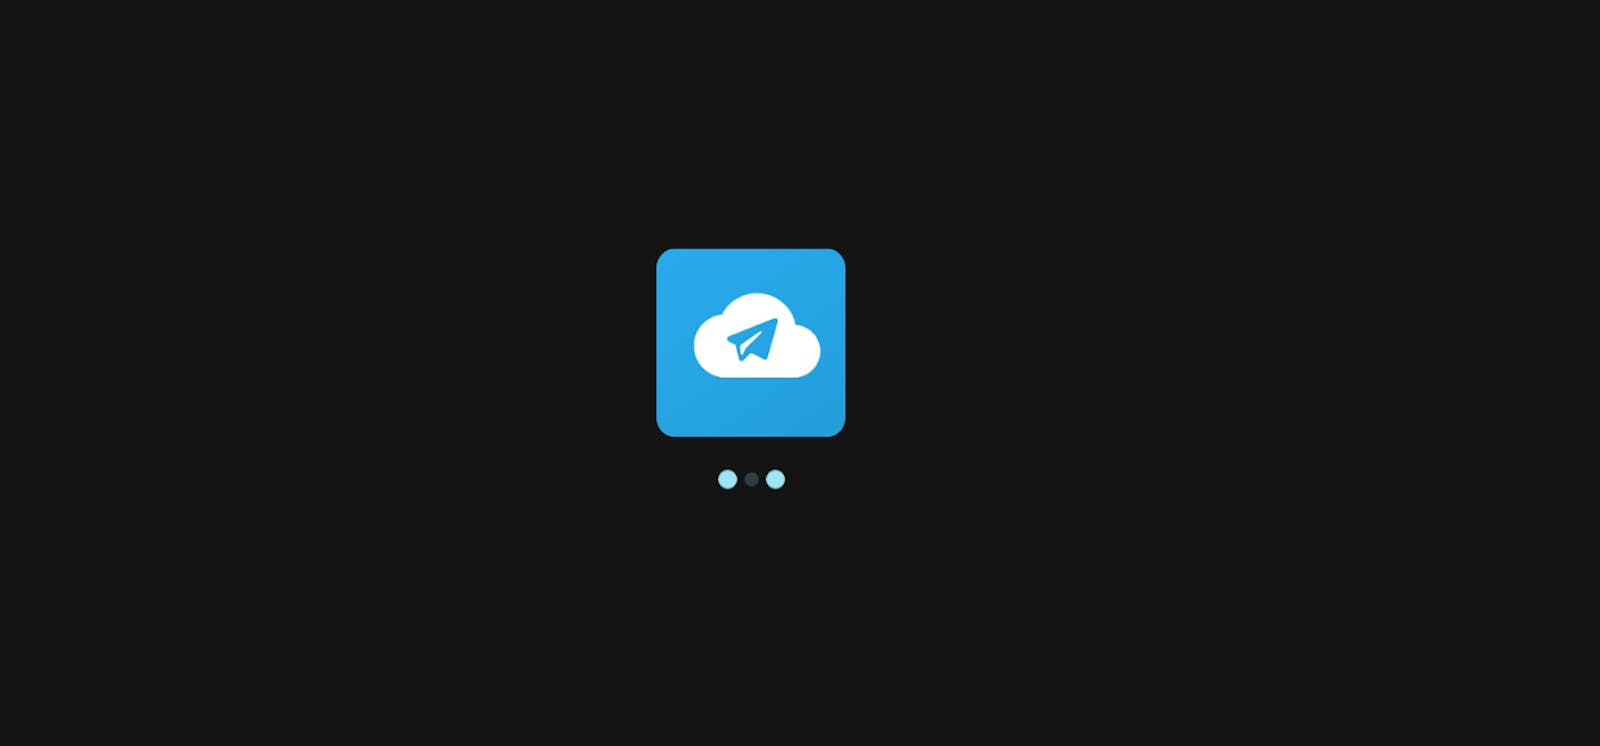 Teledrive ultimate cloud storage